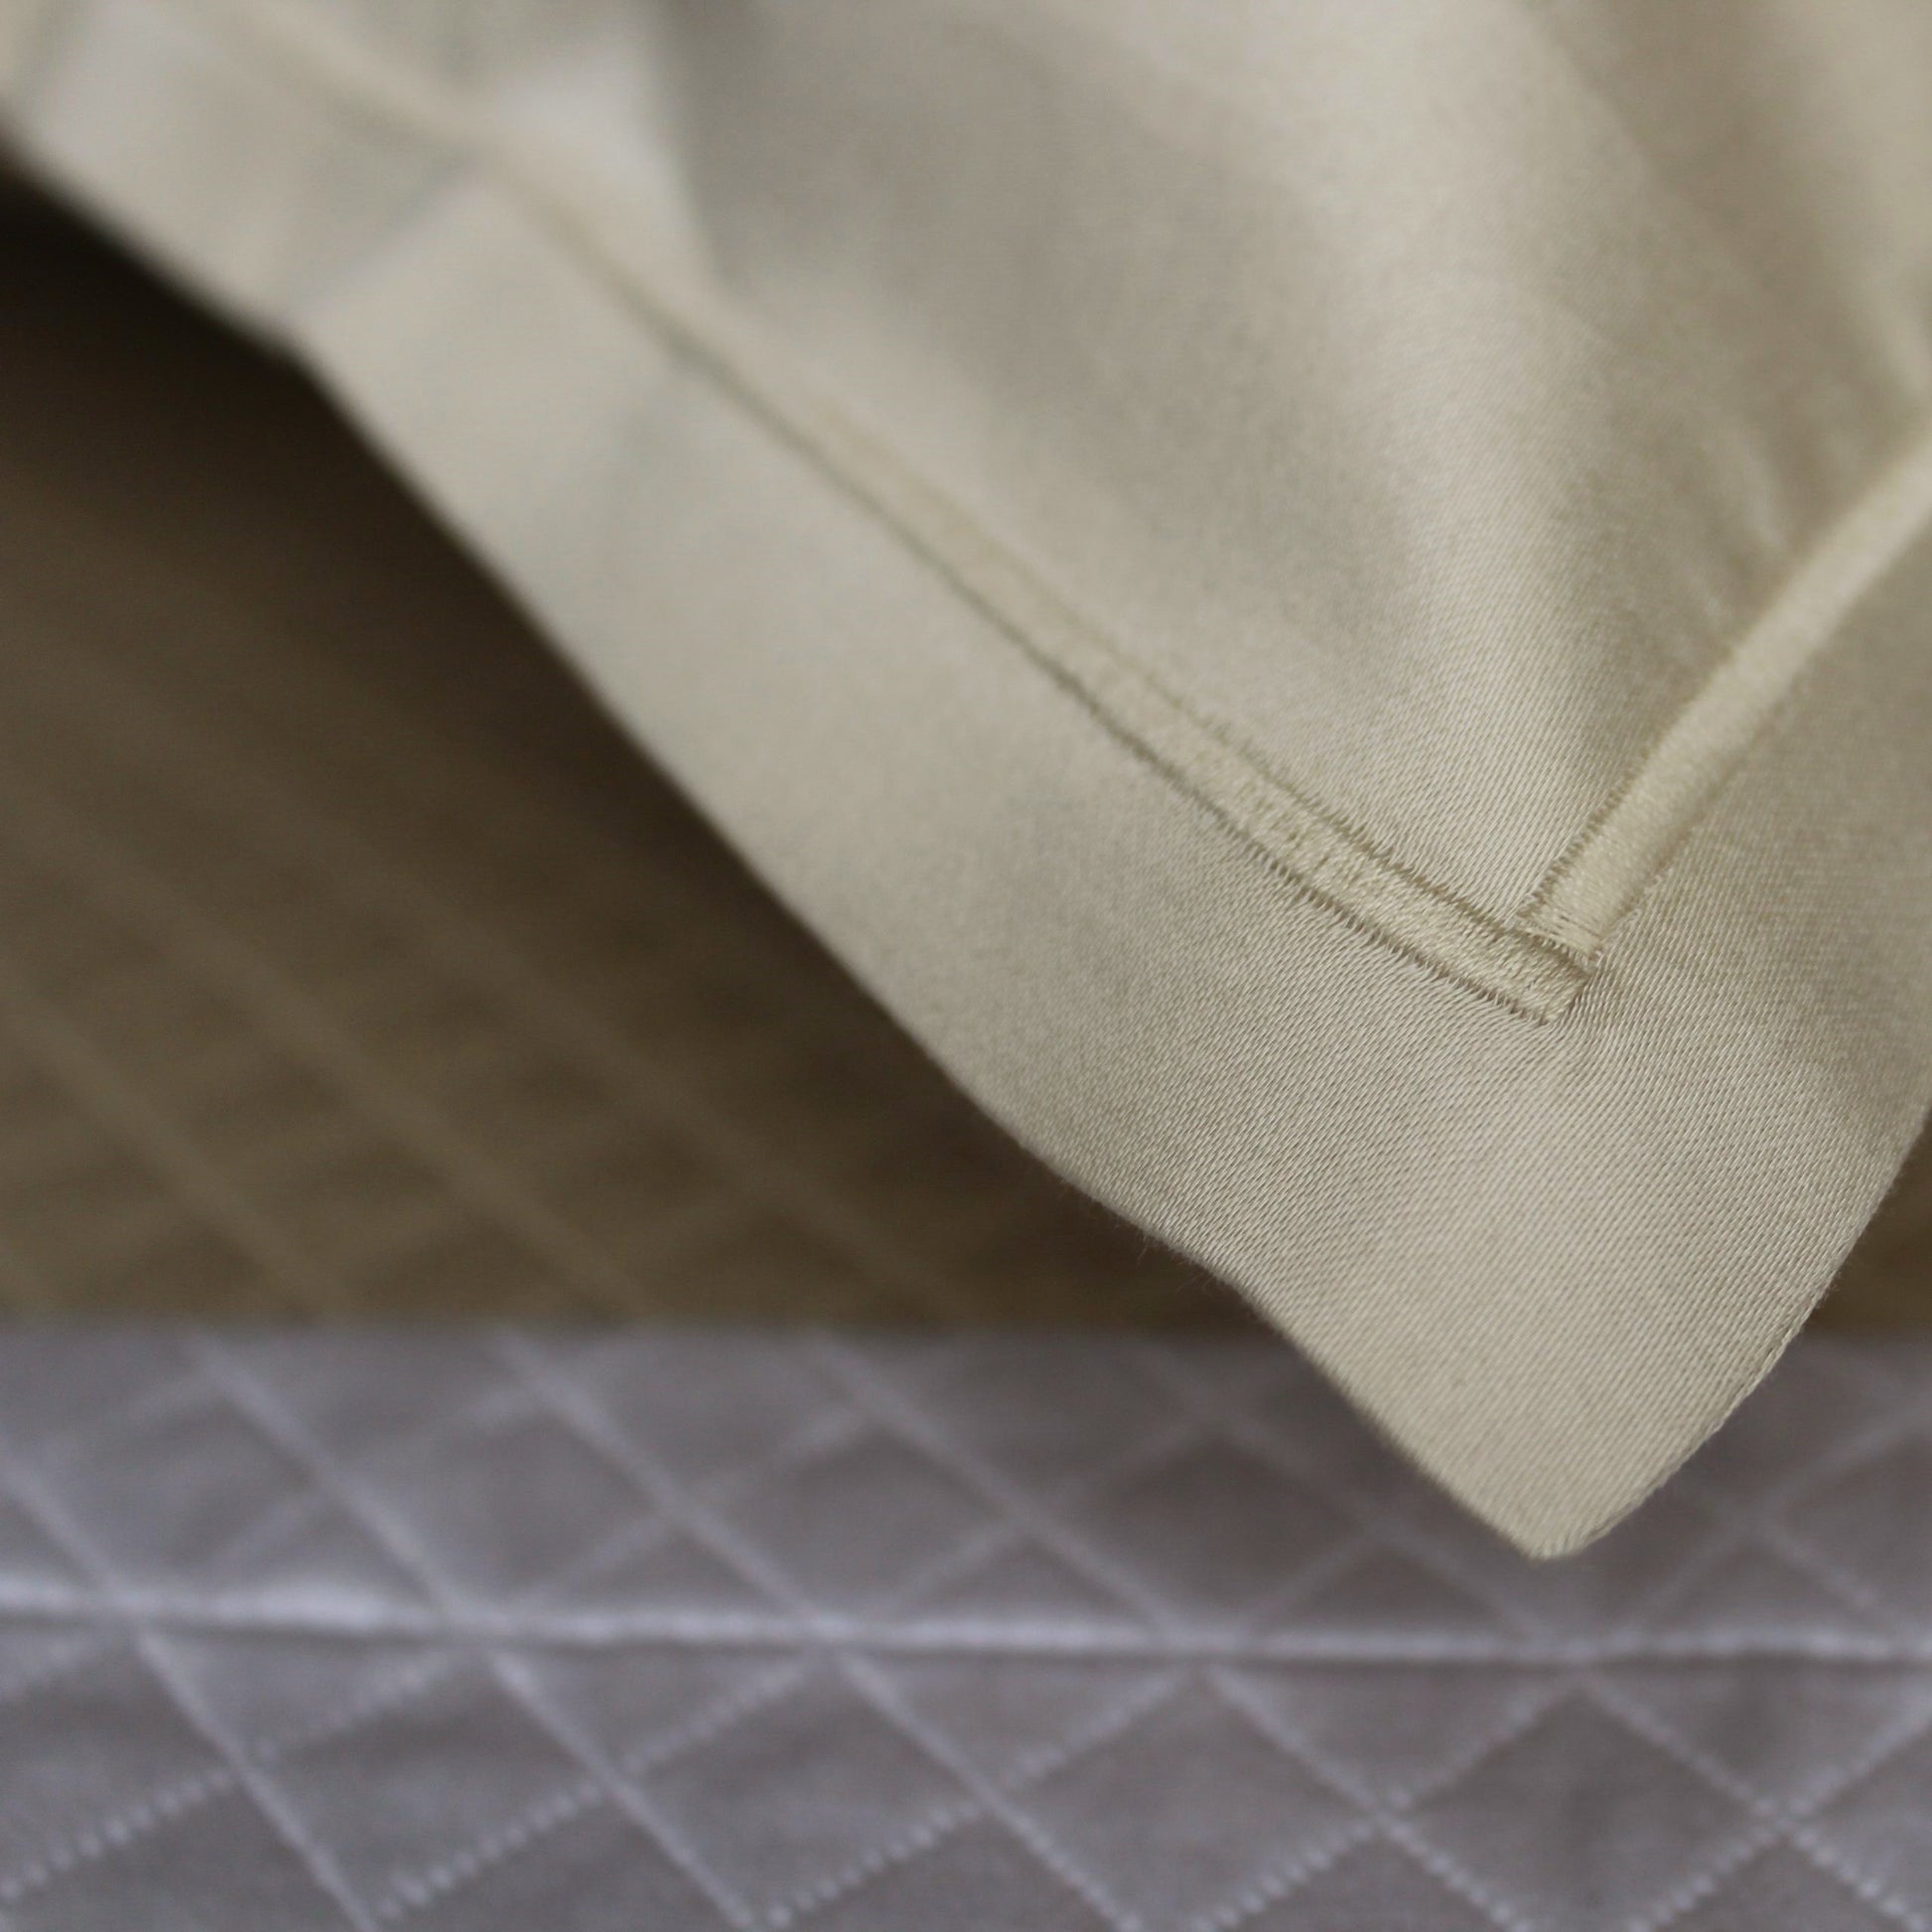 Bristol Sable Pillowcase Detail